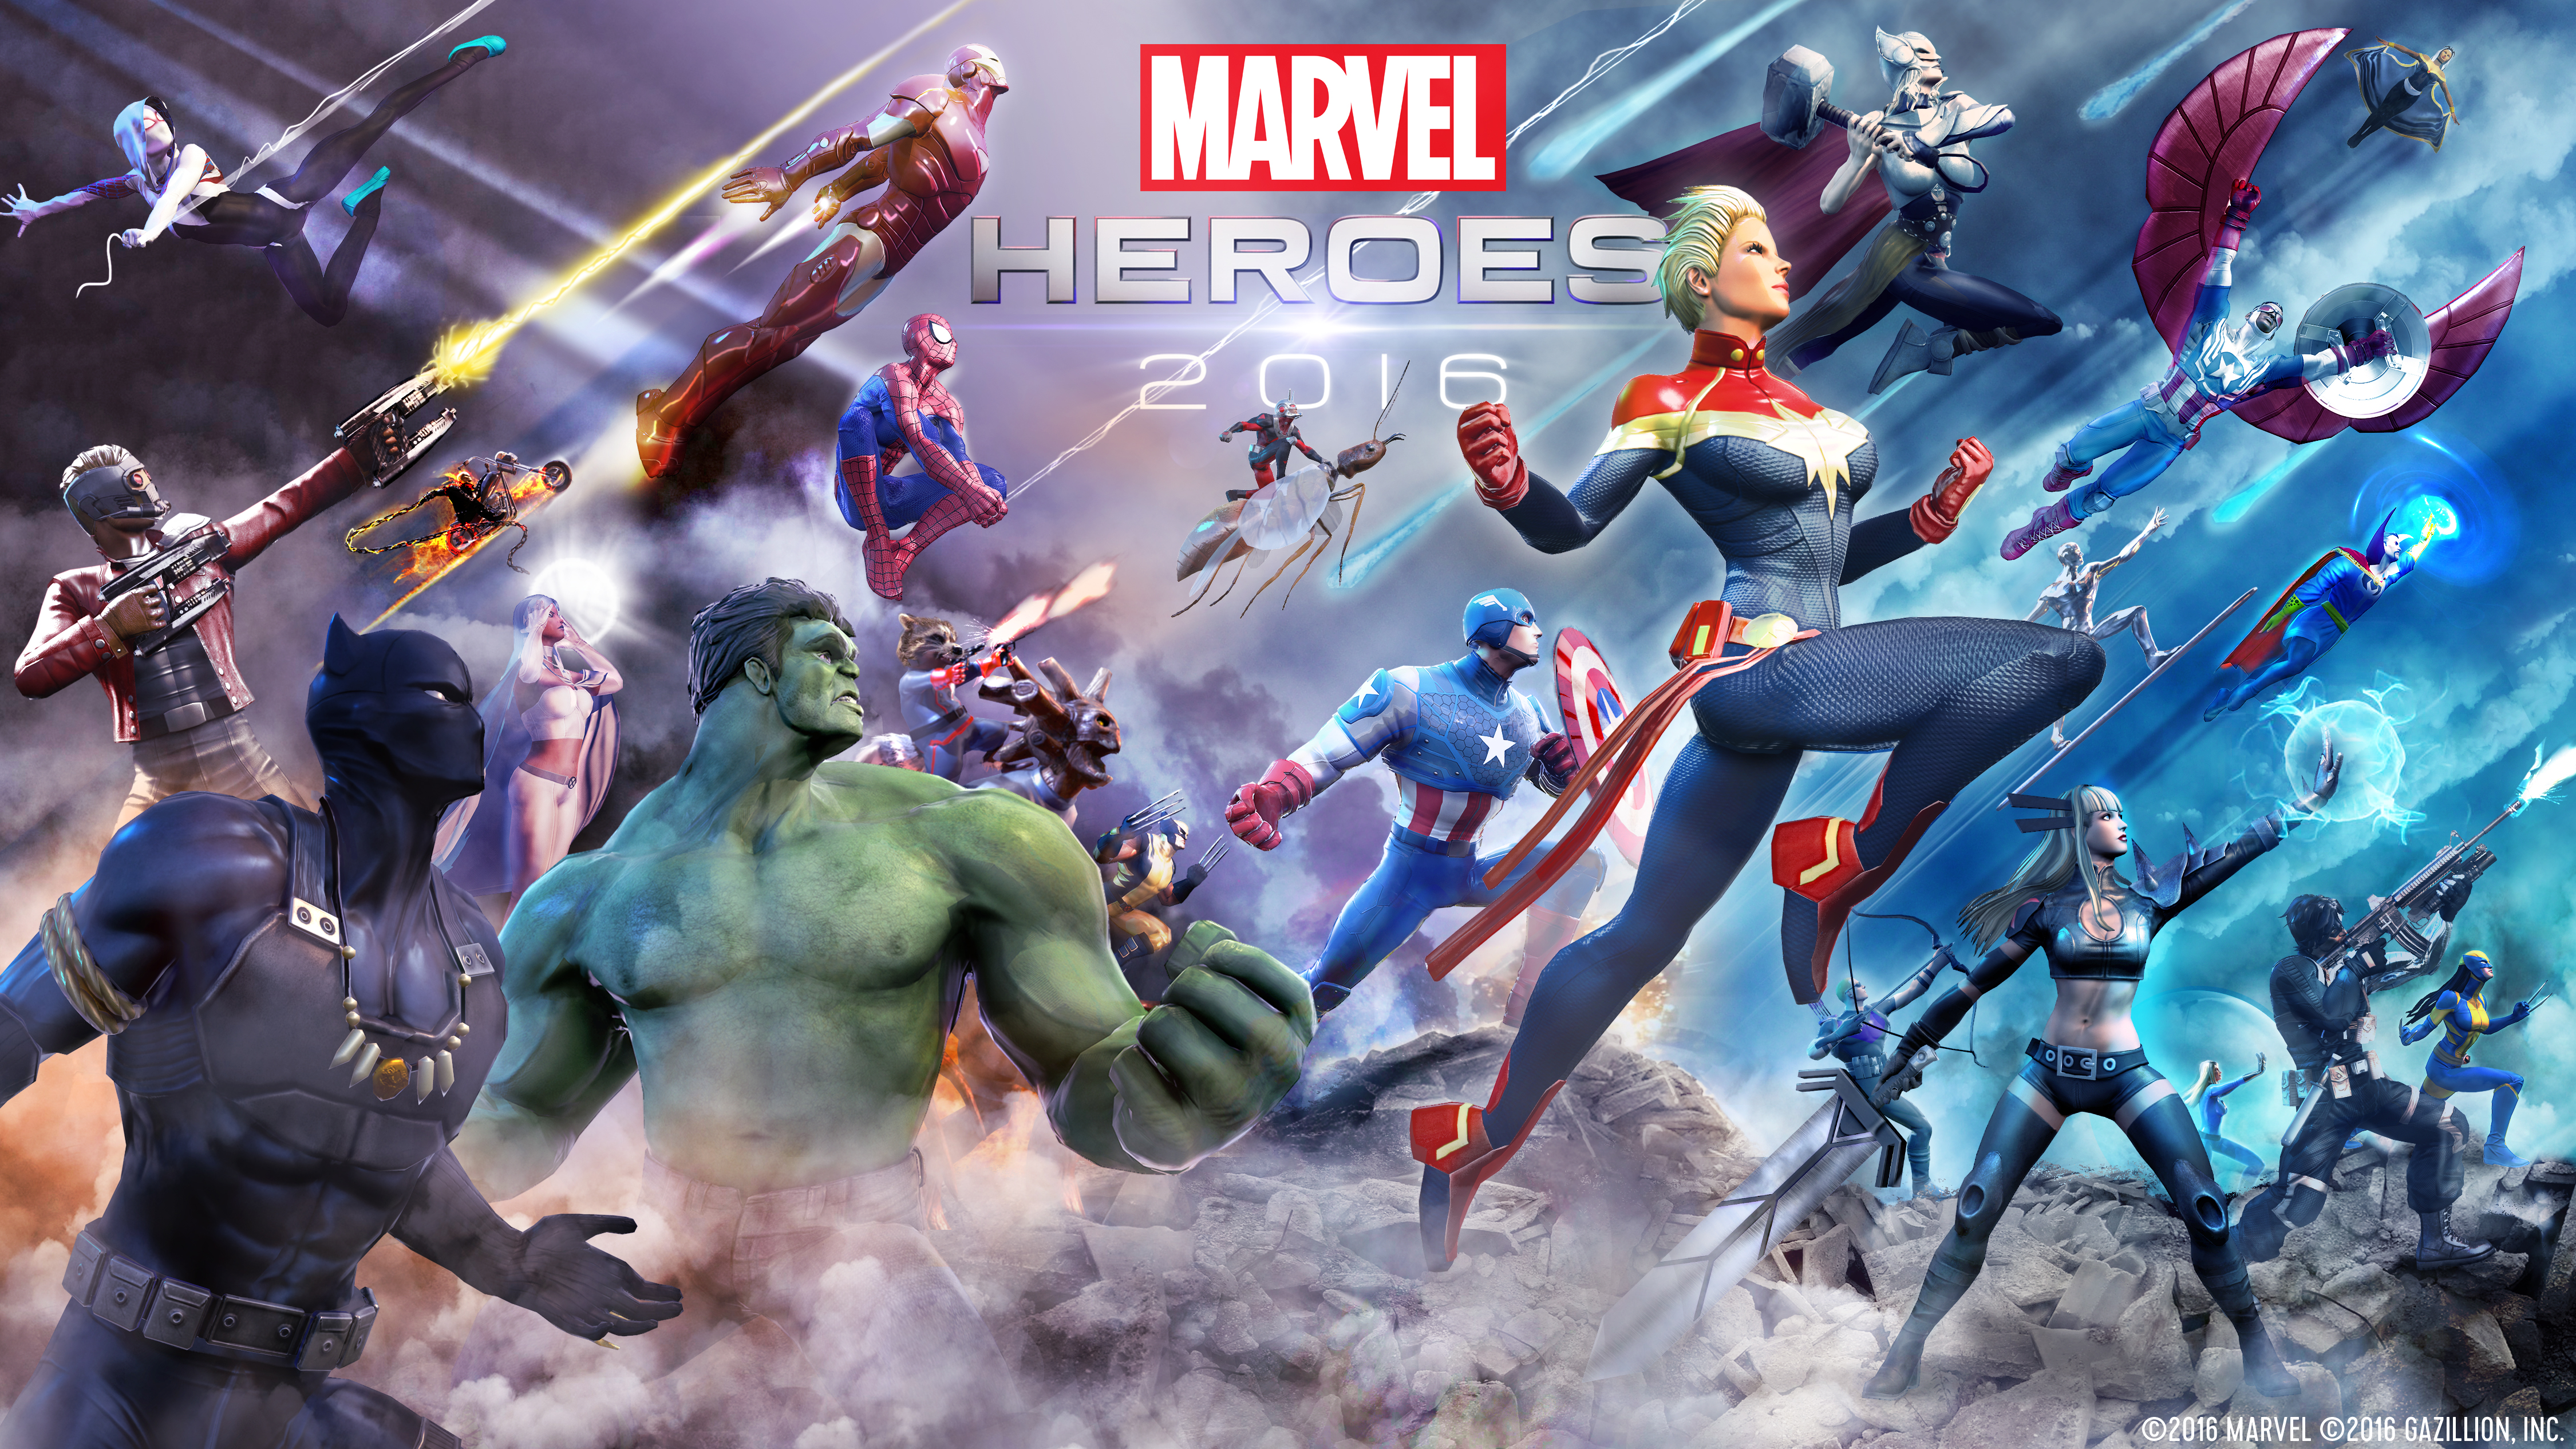 MarvelHeroes2016 KeyArt Marvel Heroes 2016 Kicks Off Today